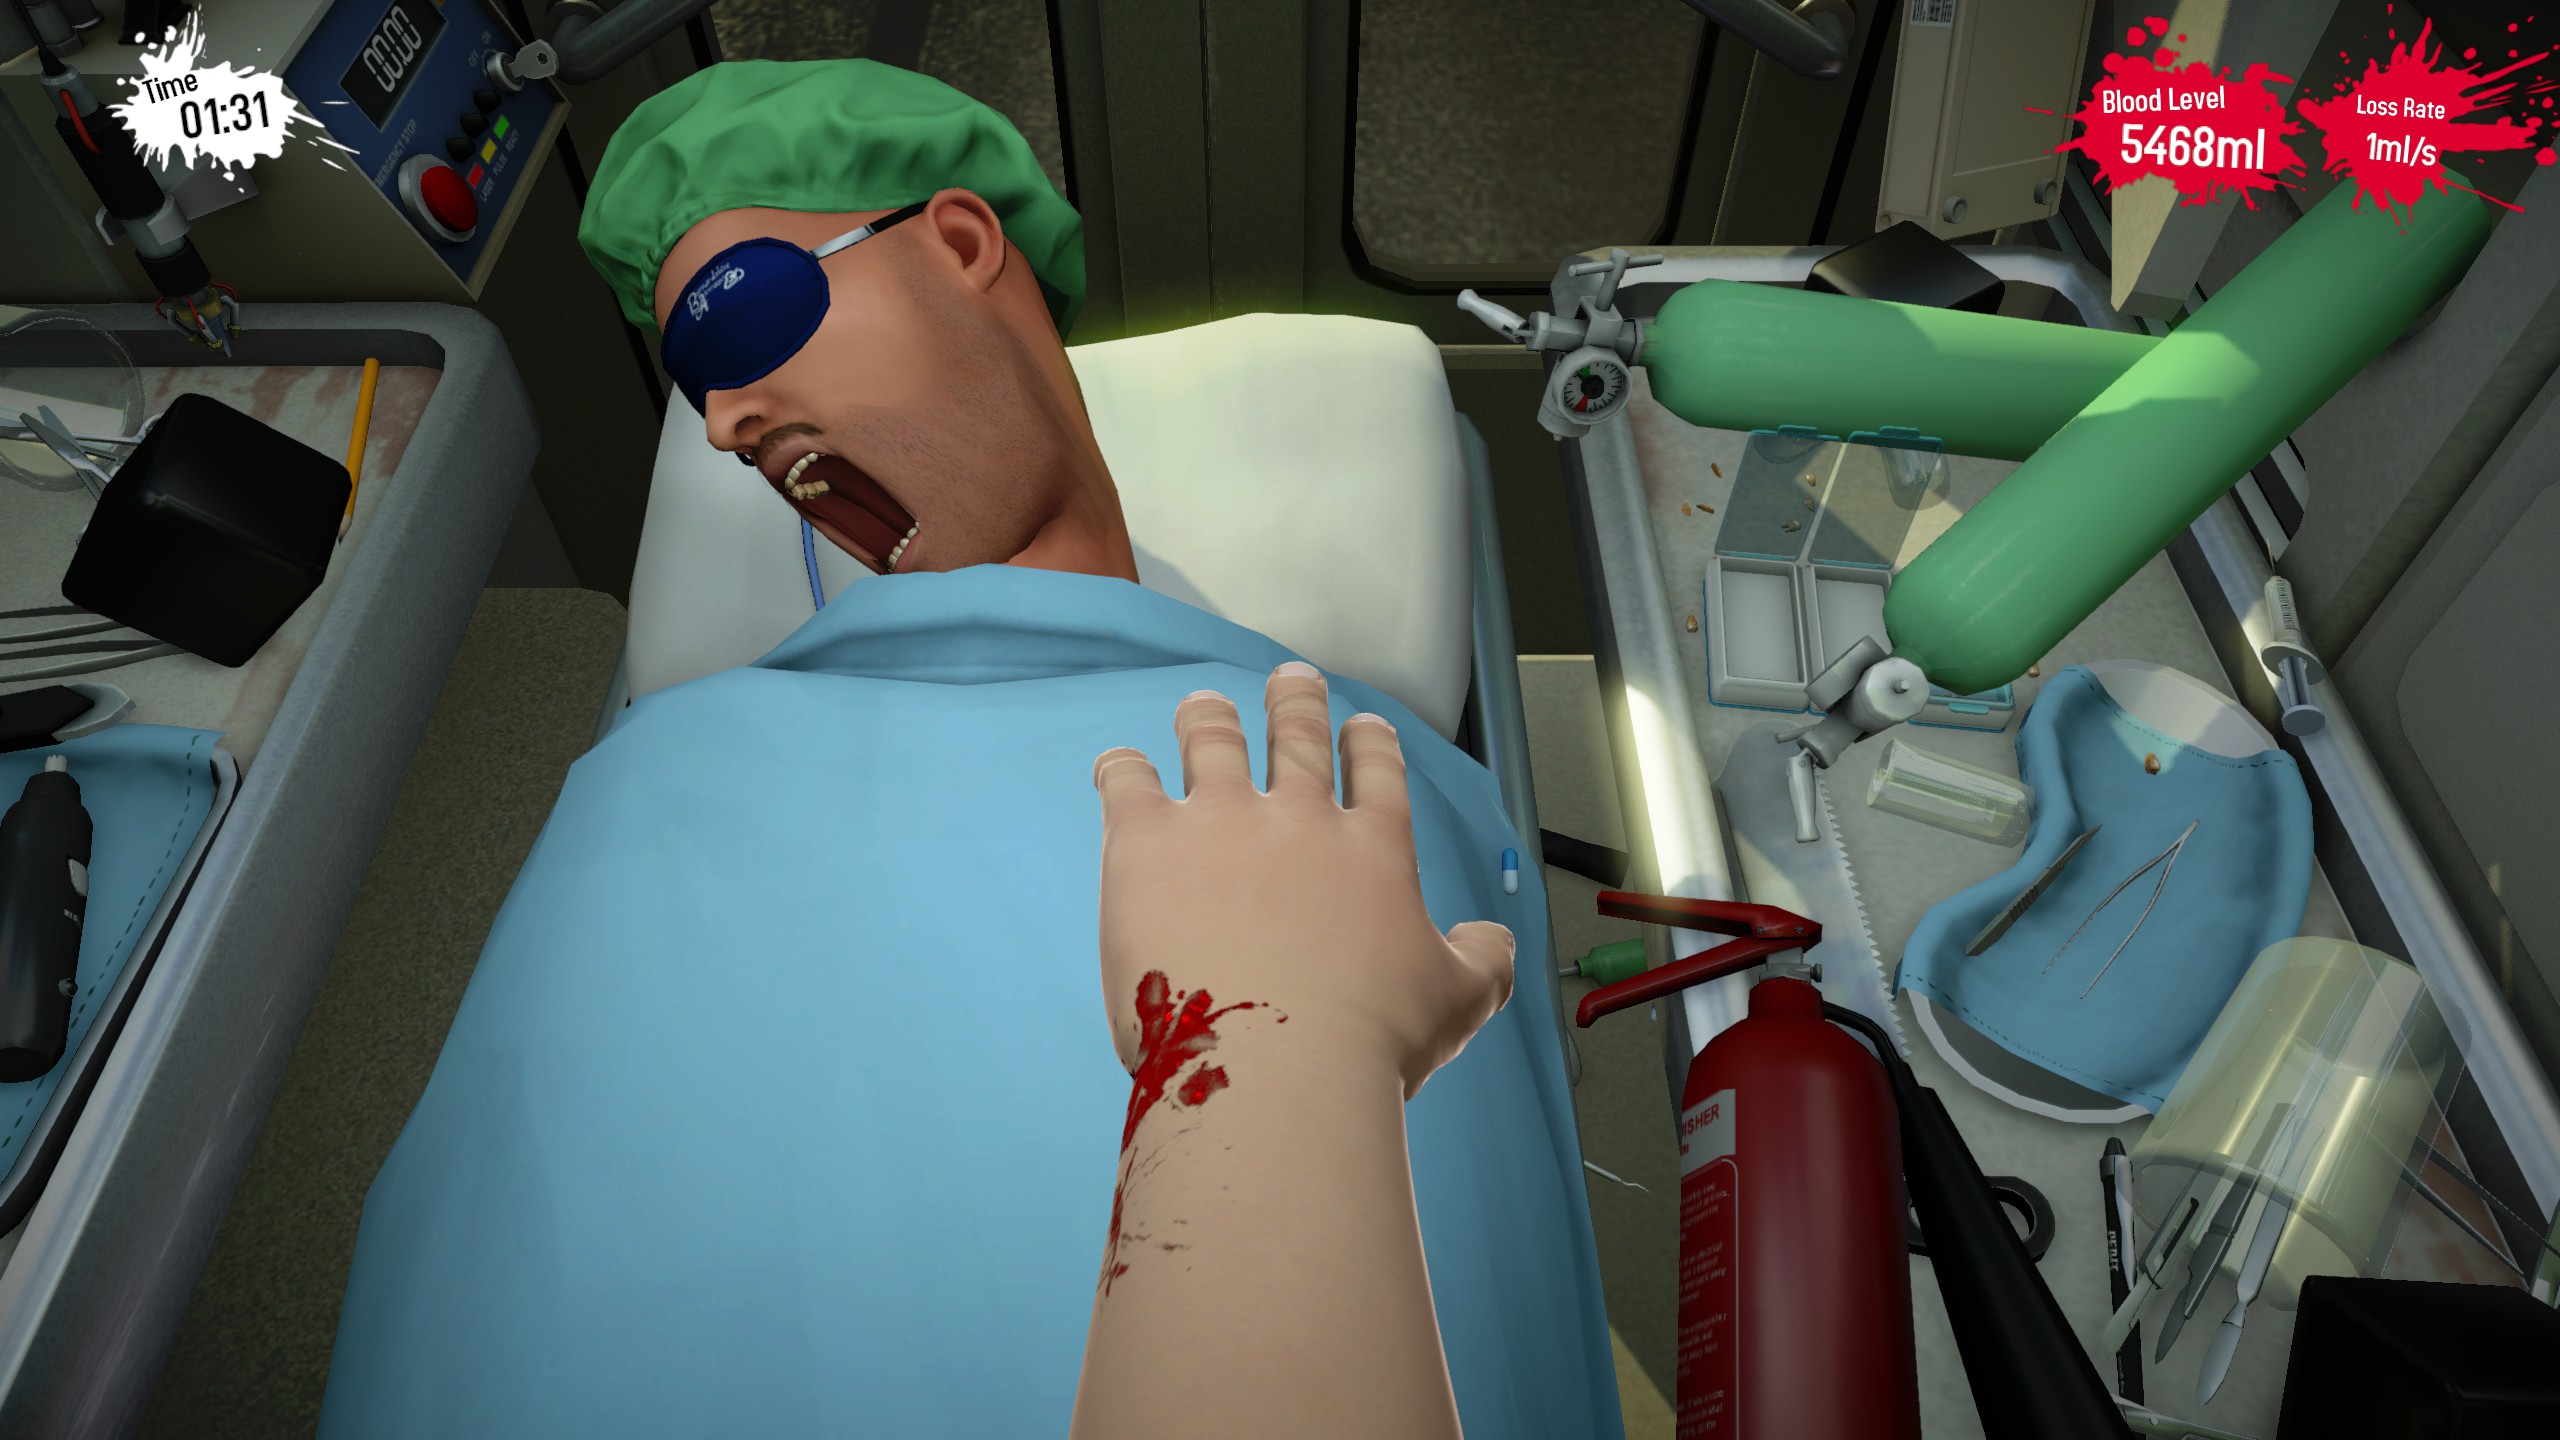 surgeon simulator game